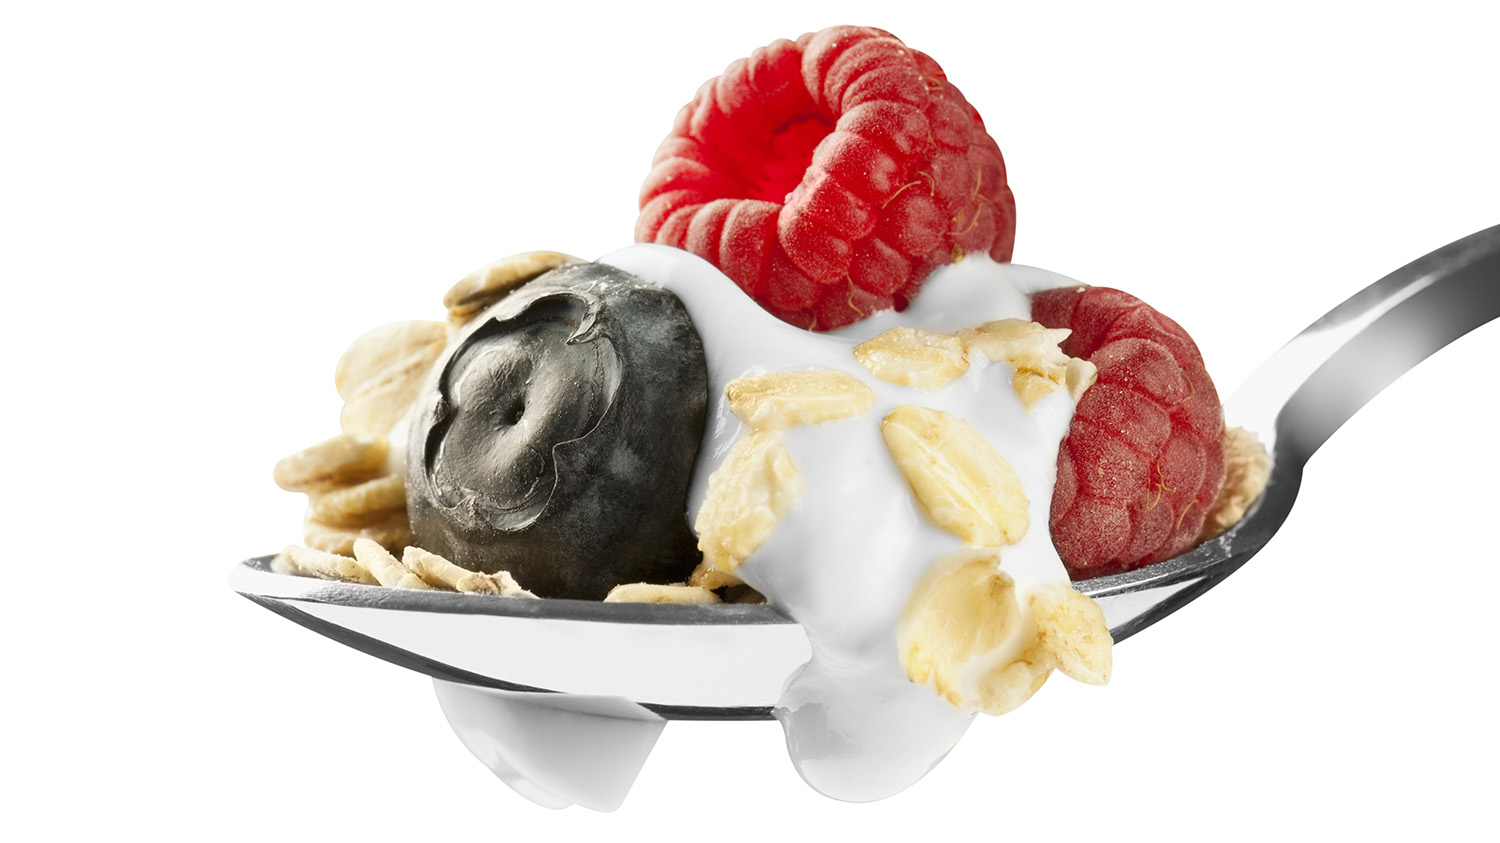 Some fruit, granola and yogurt on a spoon